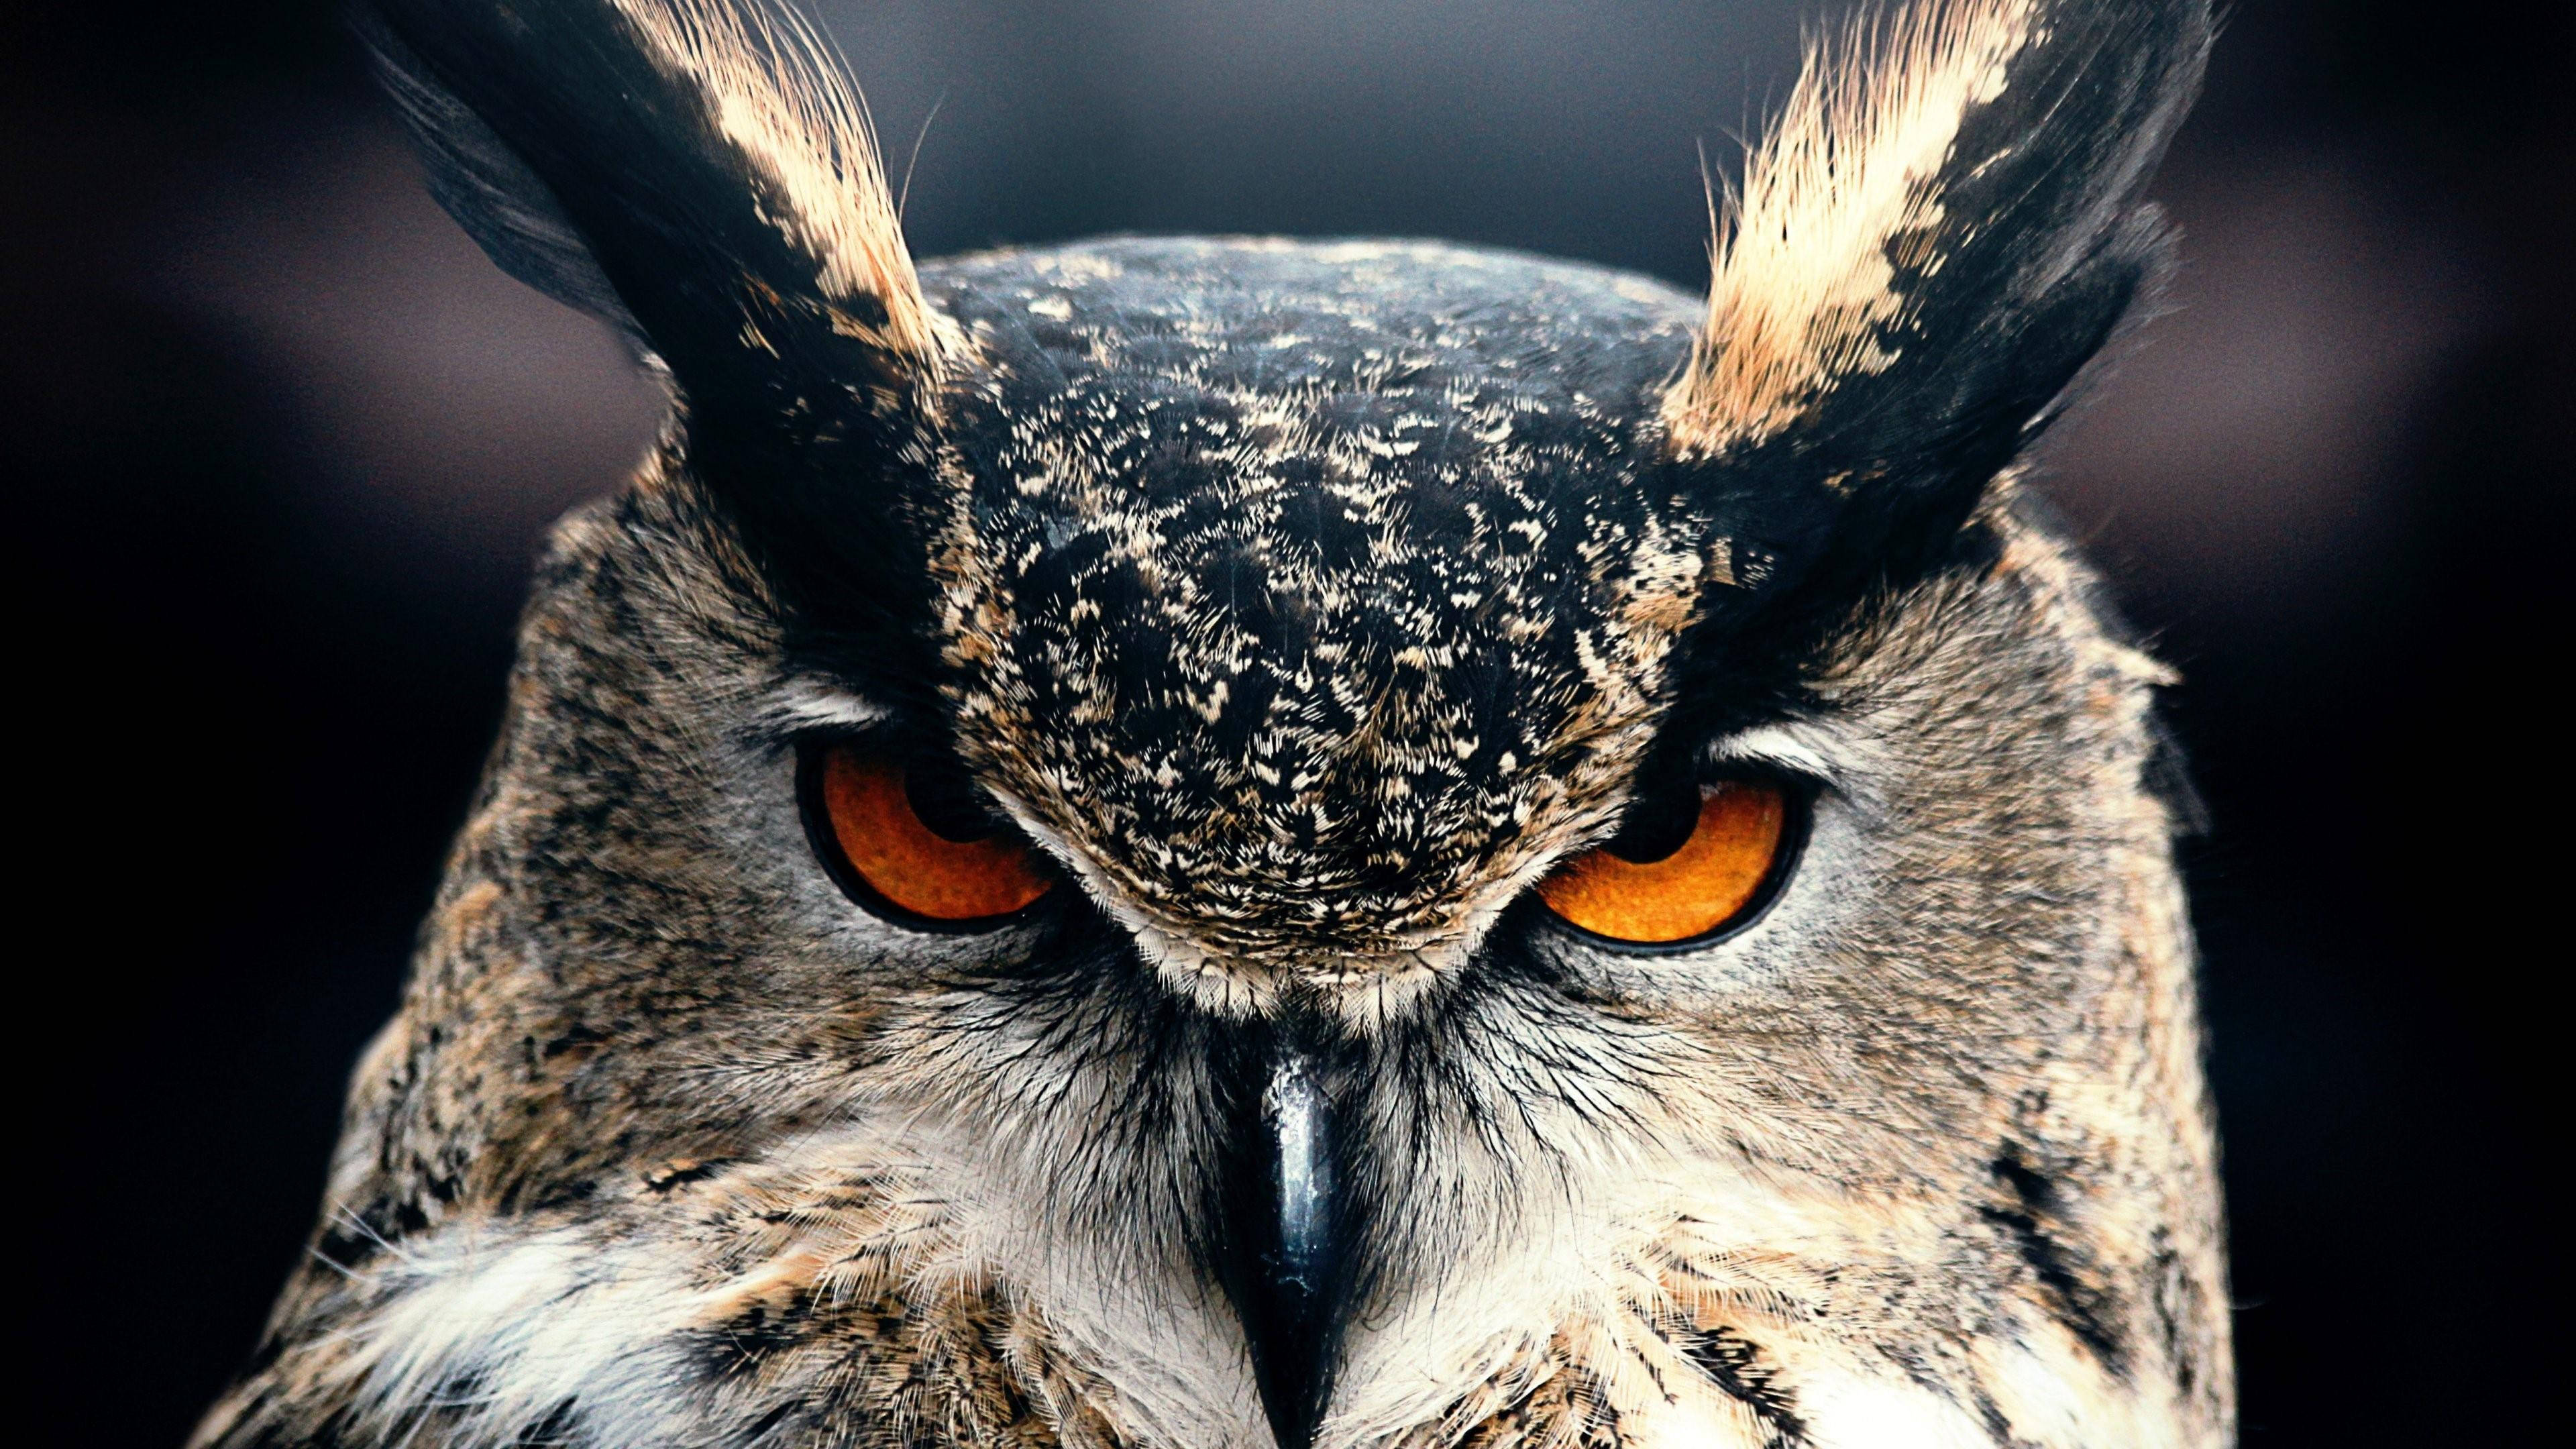 Download Owl Wallpaper